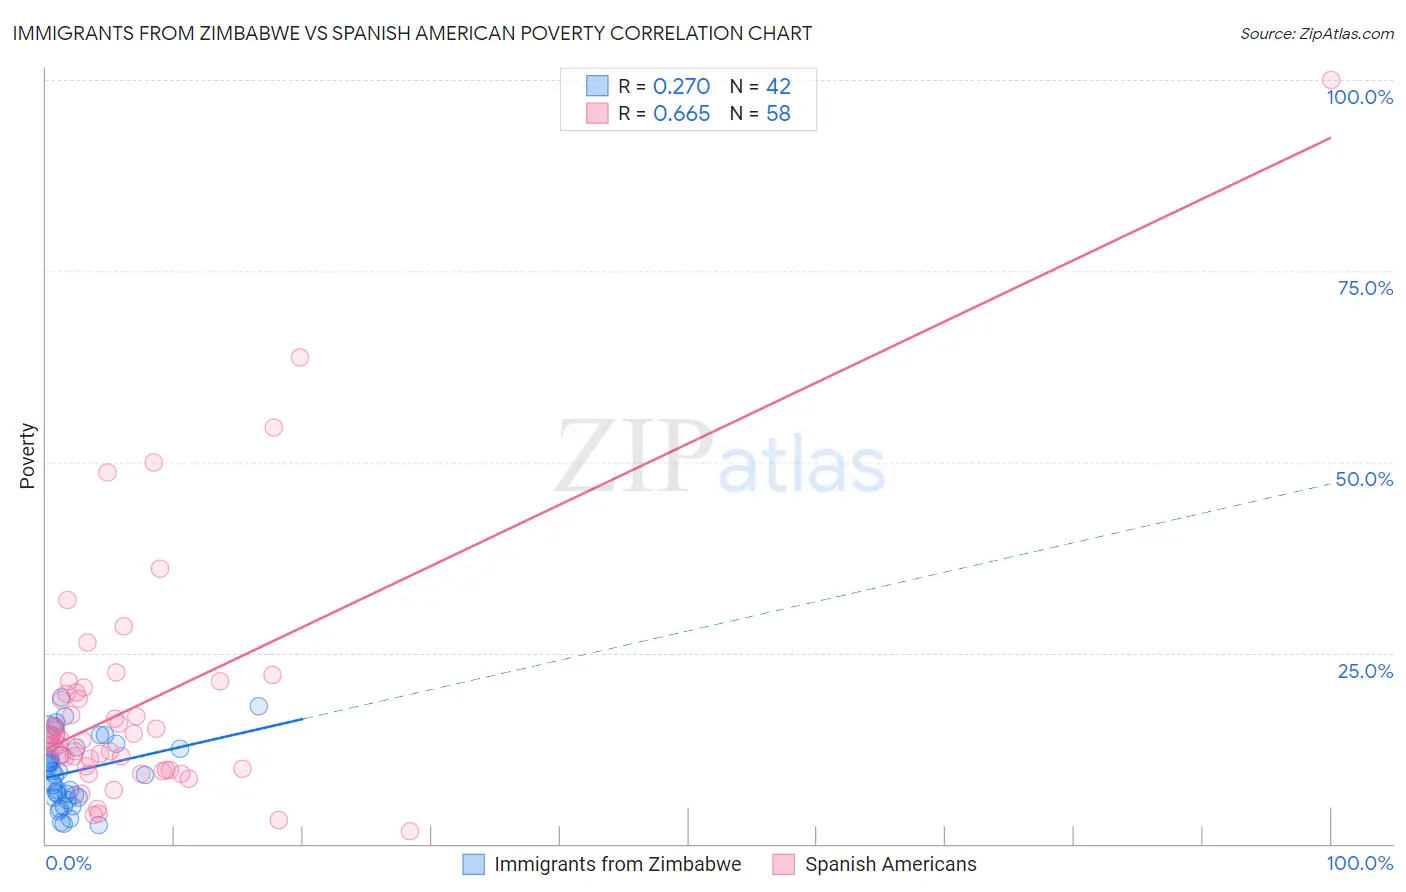 Immigrants from Zimbabwe vs Spanish American Poverty